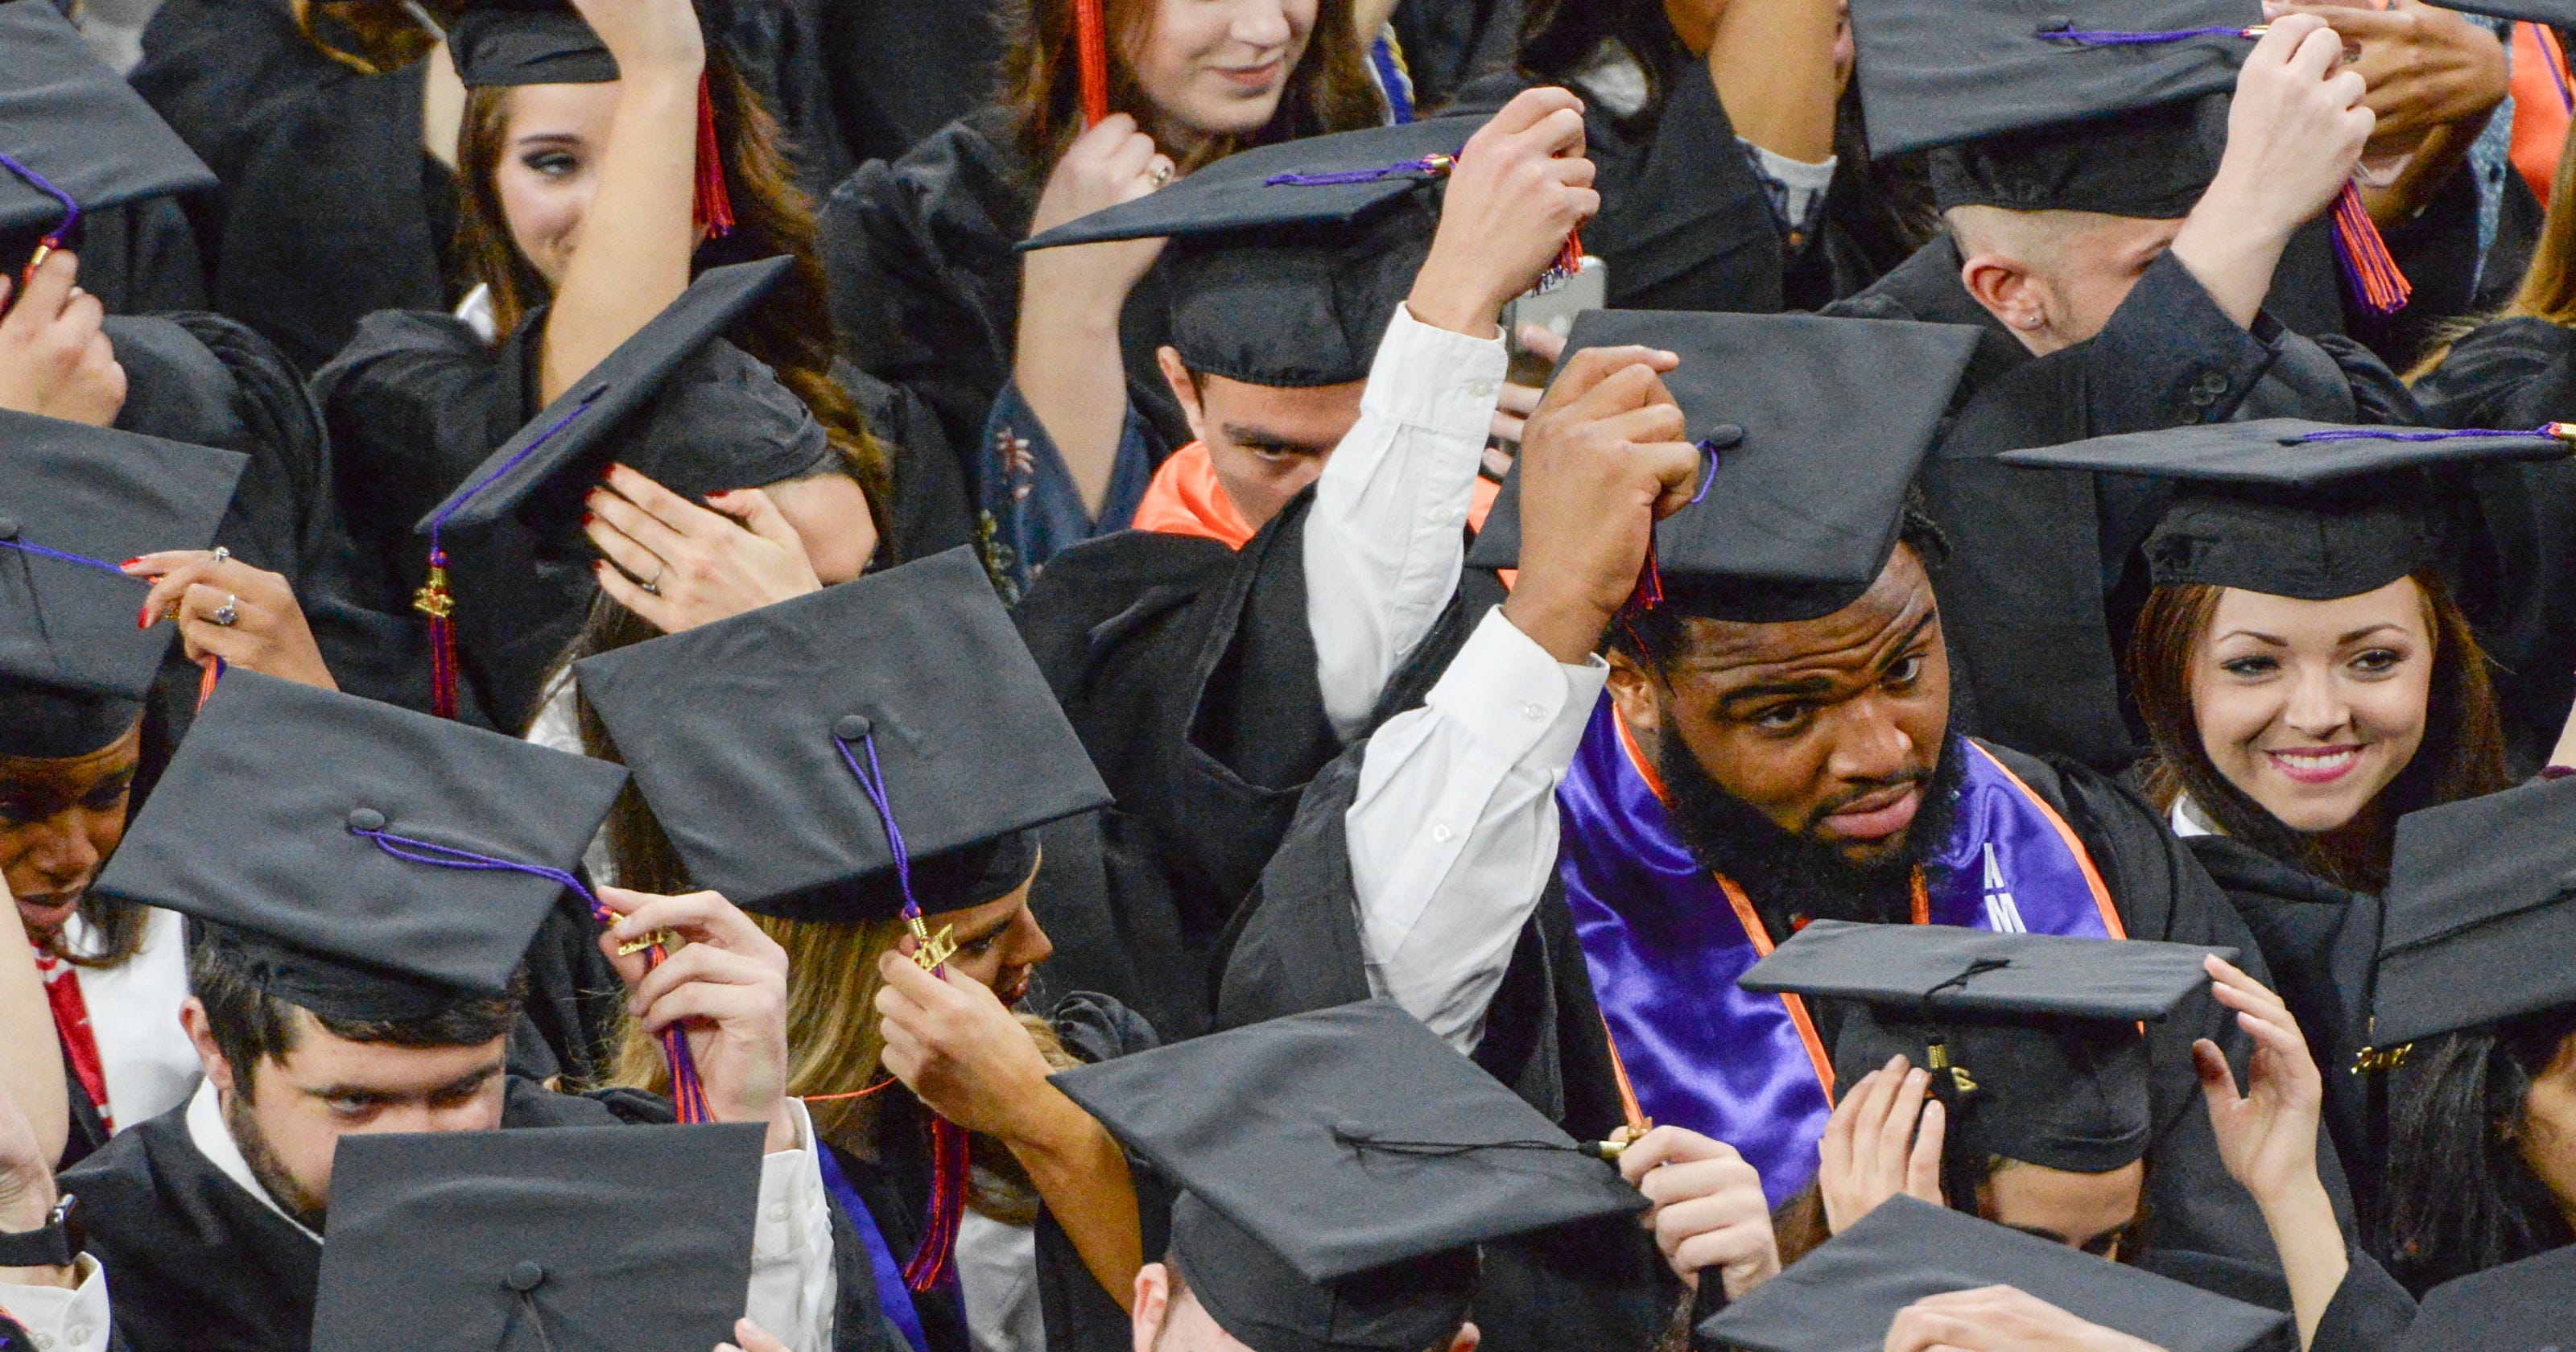 Gallery Photos from Clemson University graduation